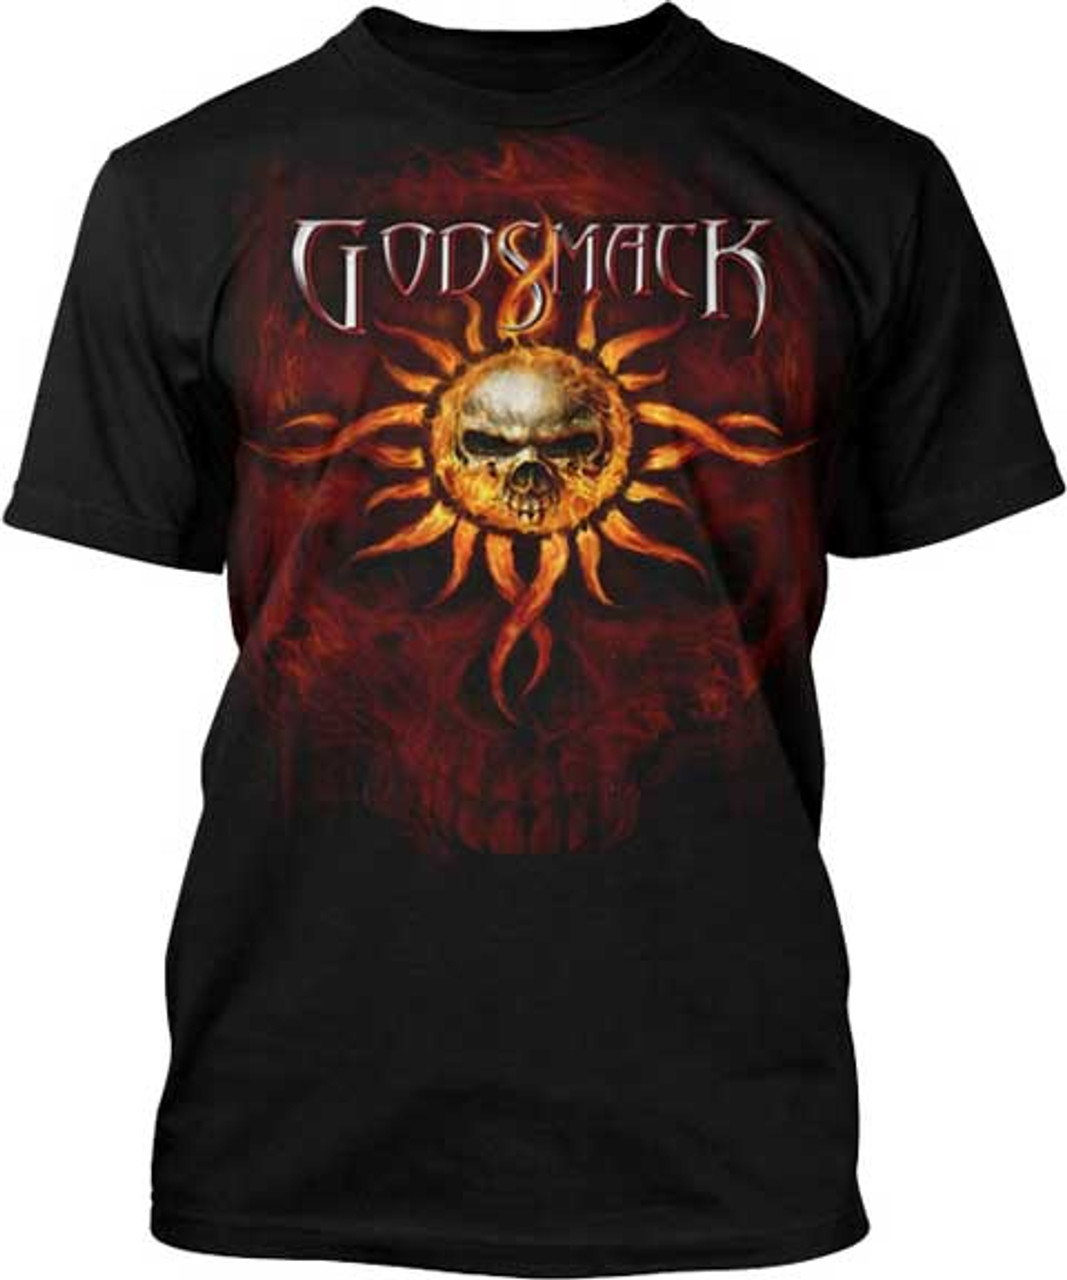 godsmack t shirts